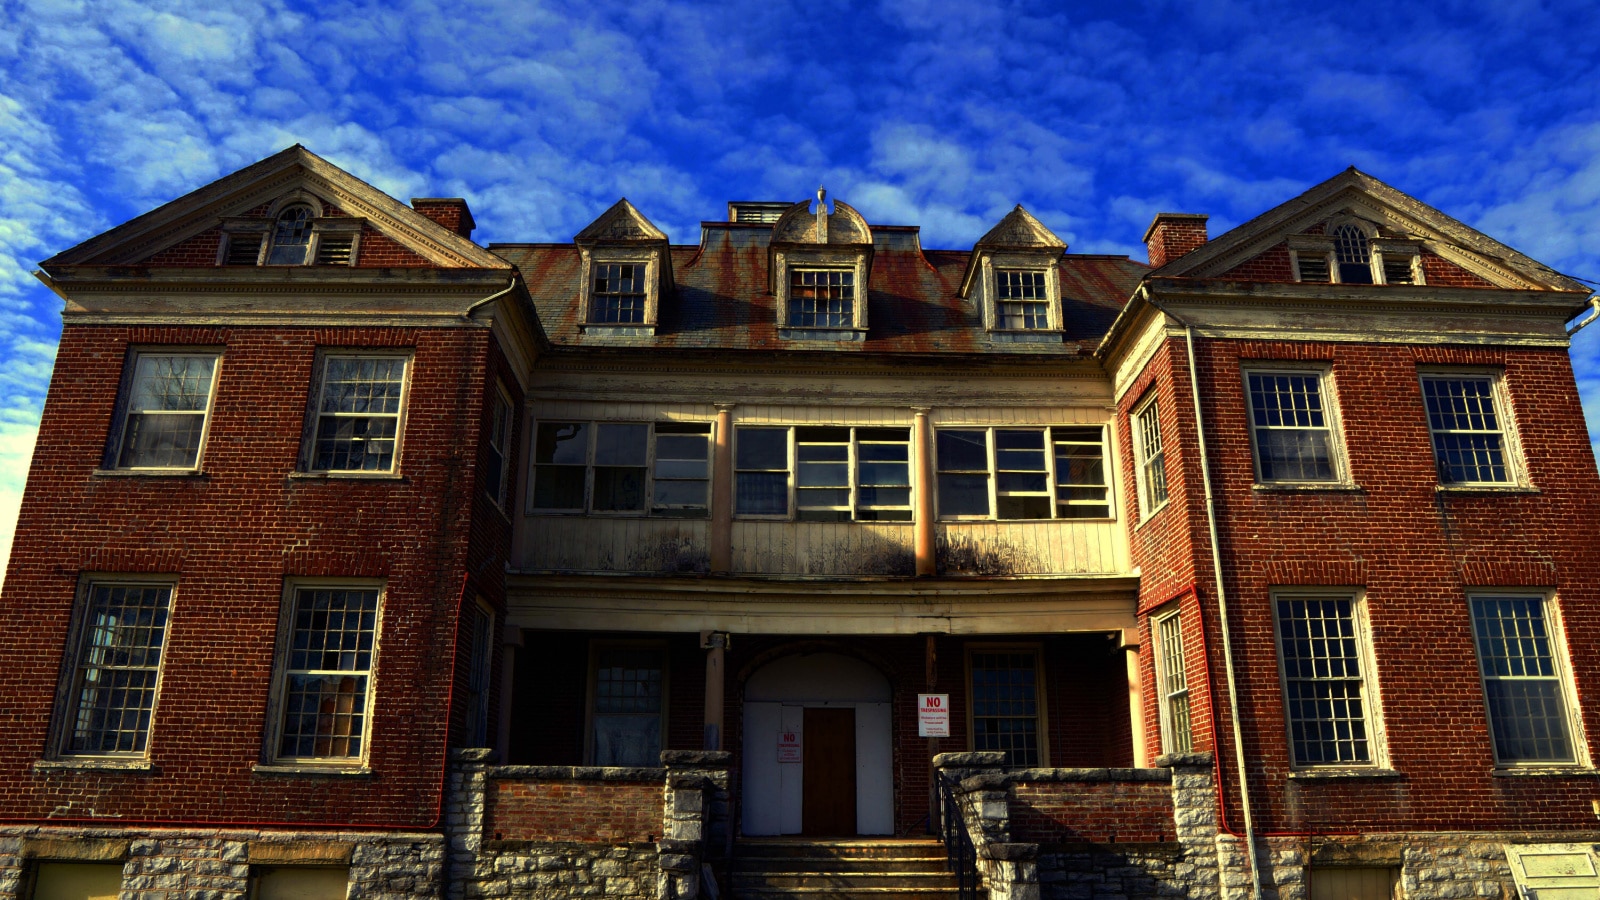 Fairlawn, Virginia, USA, 2/16/2020 St. Albans Sanitarium and Haunted House on a sunny blue sky day.